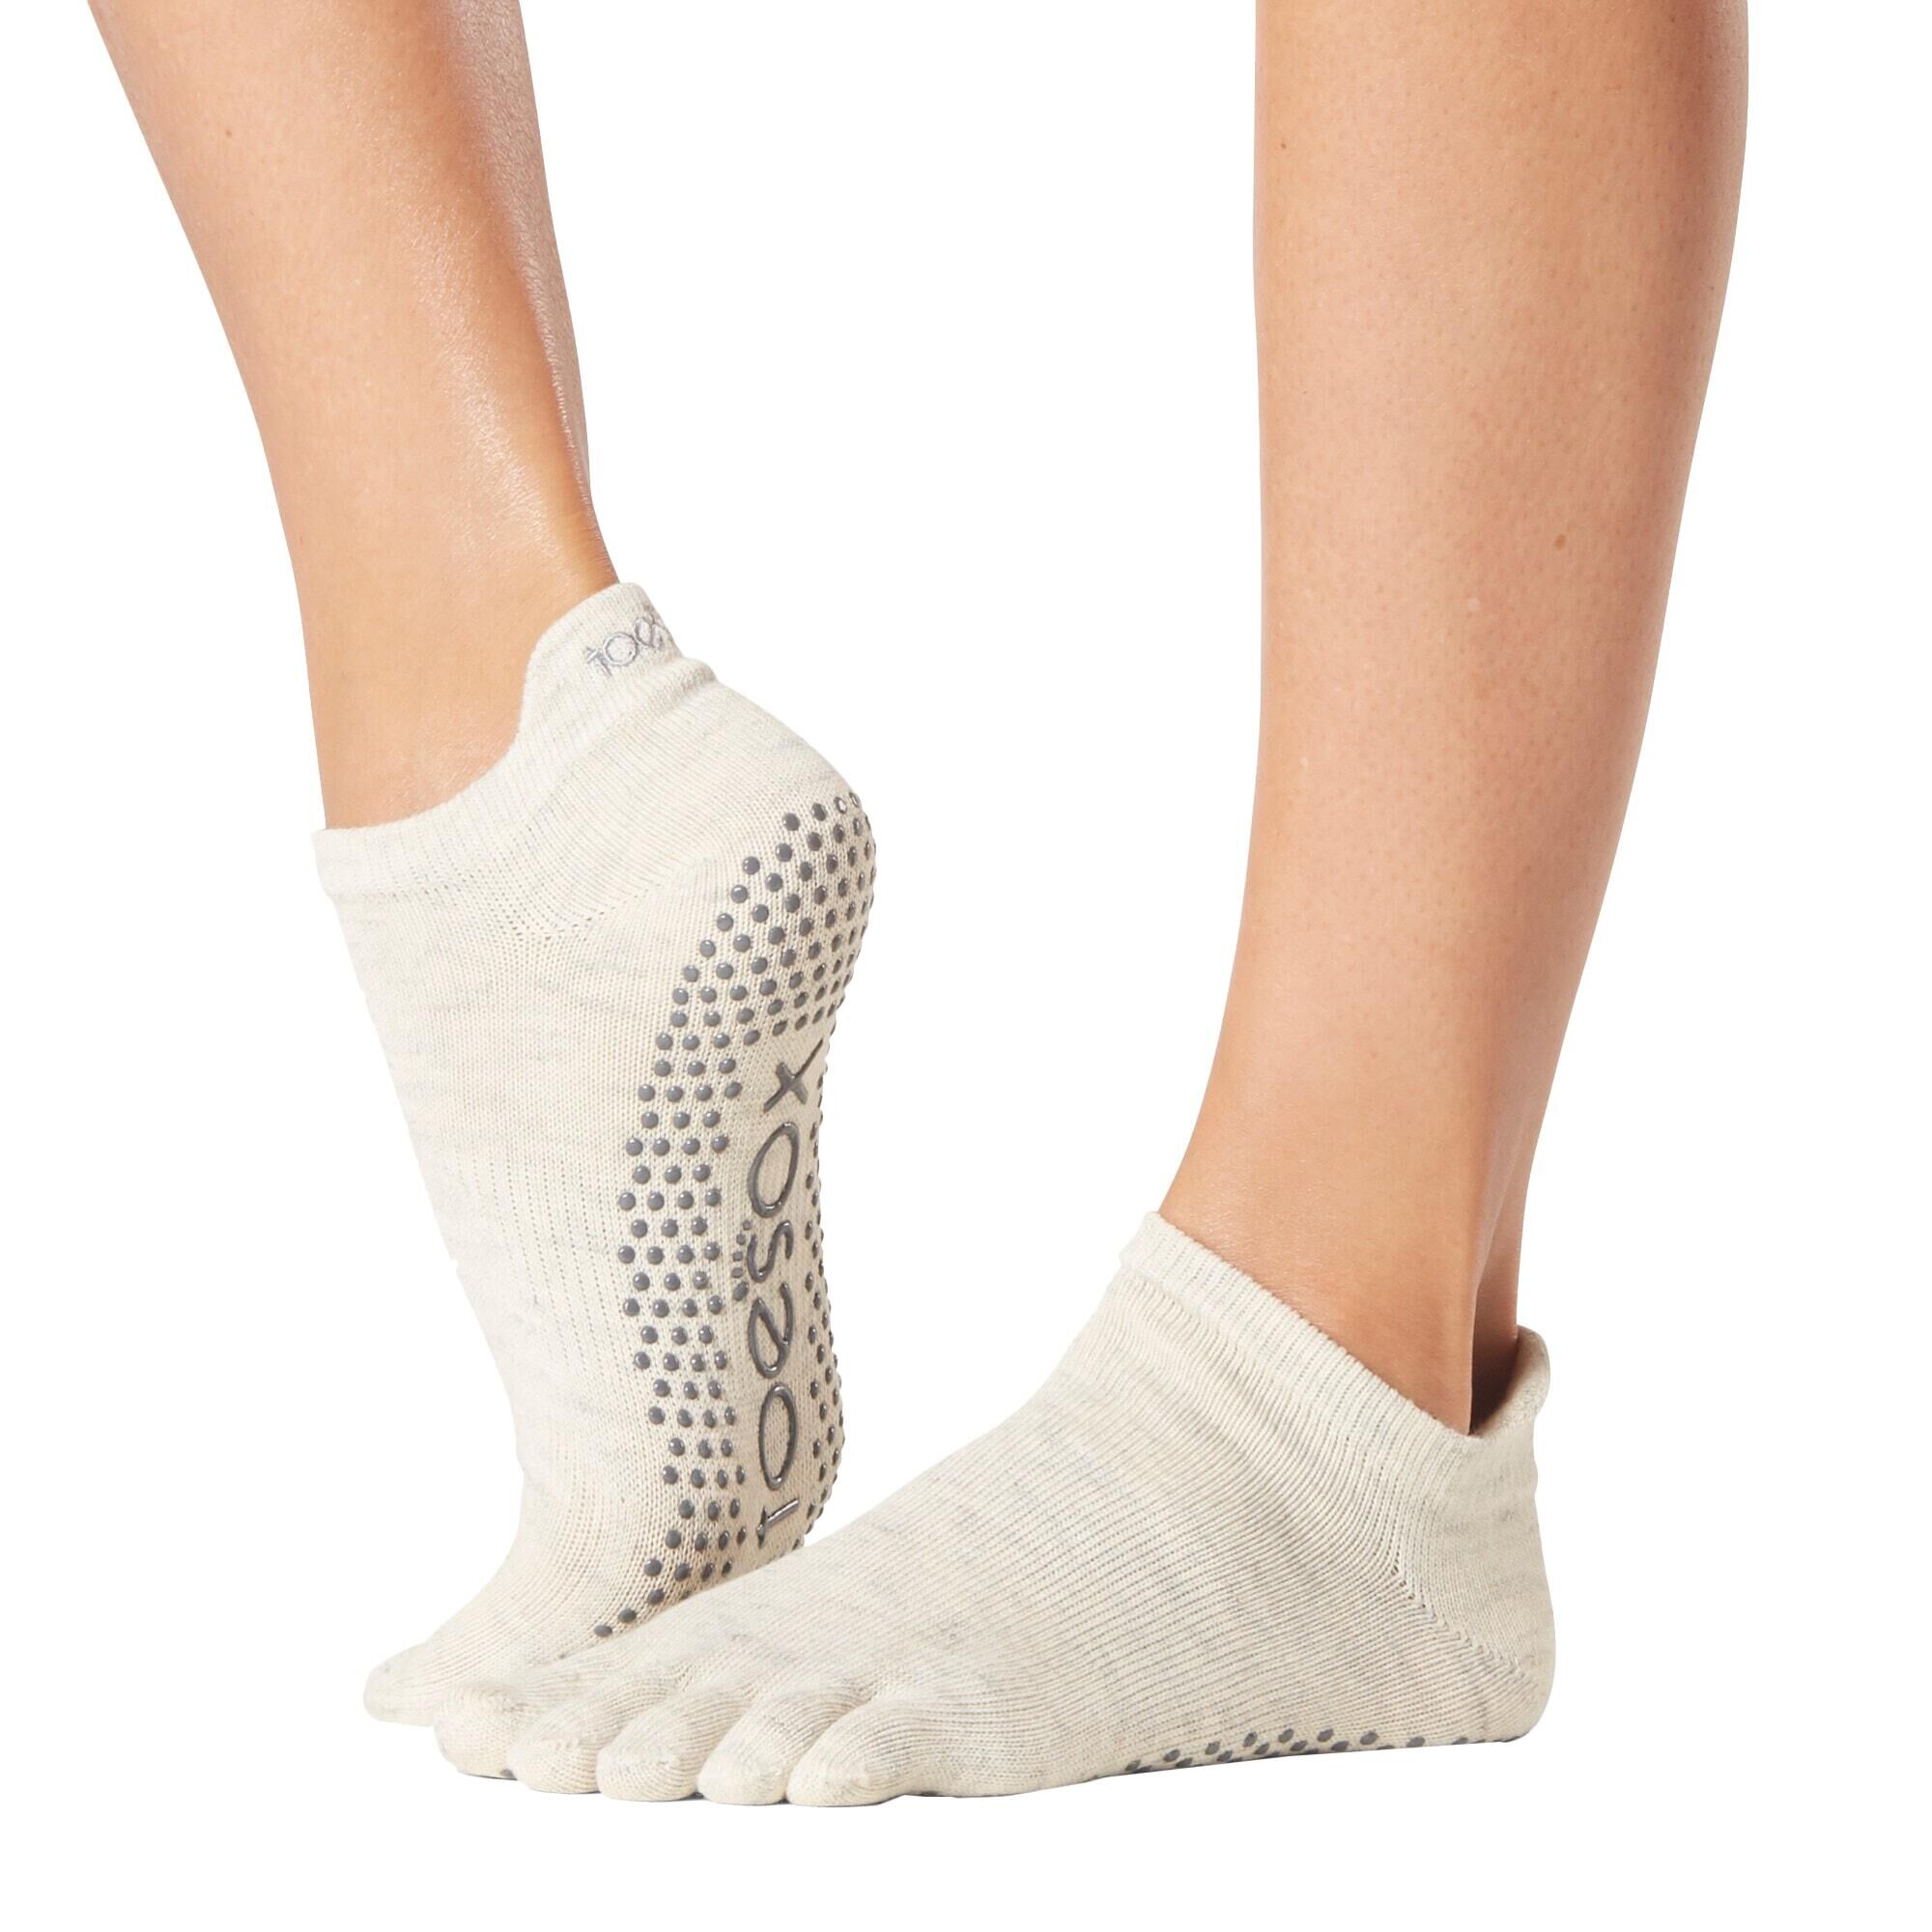 FITNESS-MAD Womens/Ladies Low Rise Toe Socks (Oatmeal)